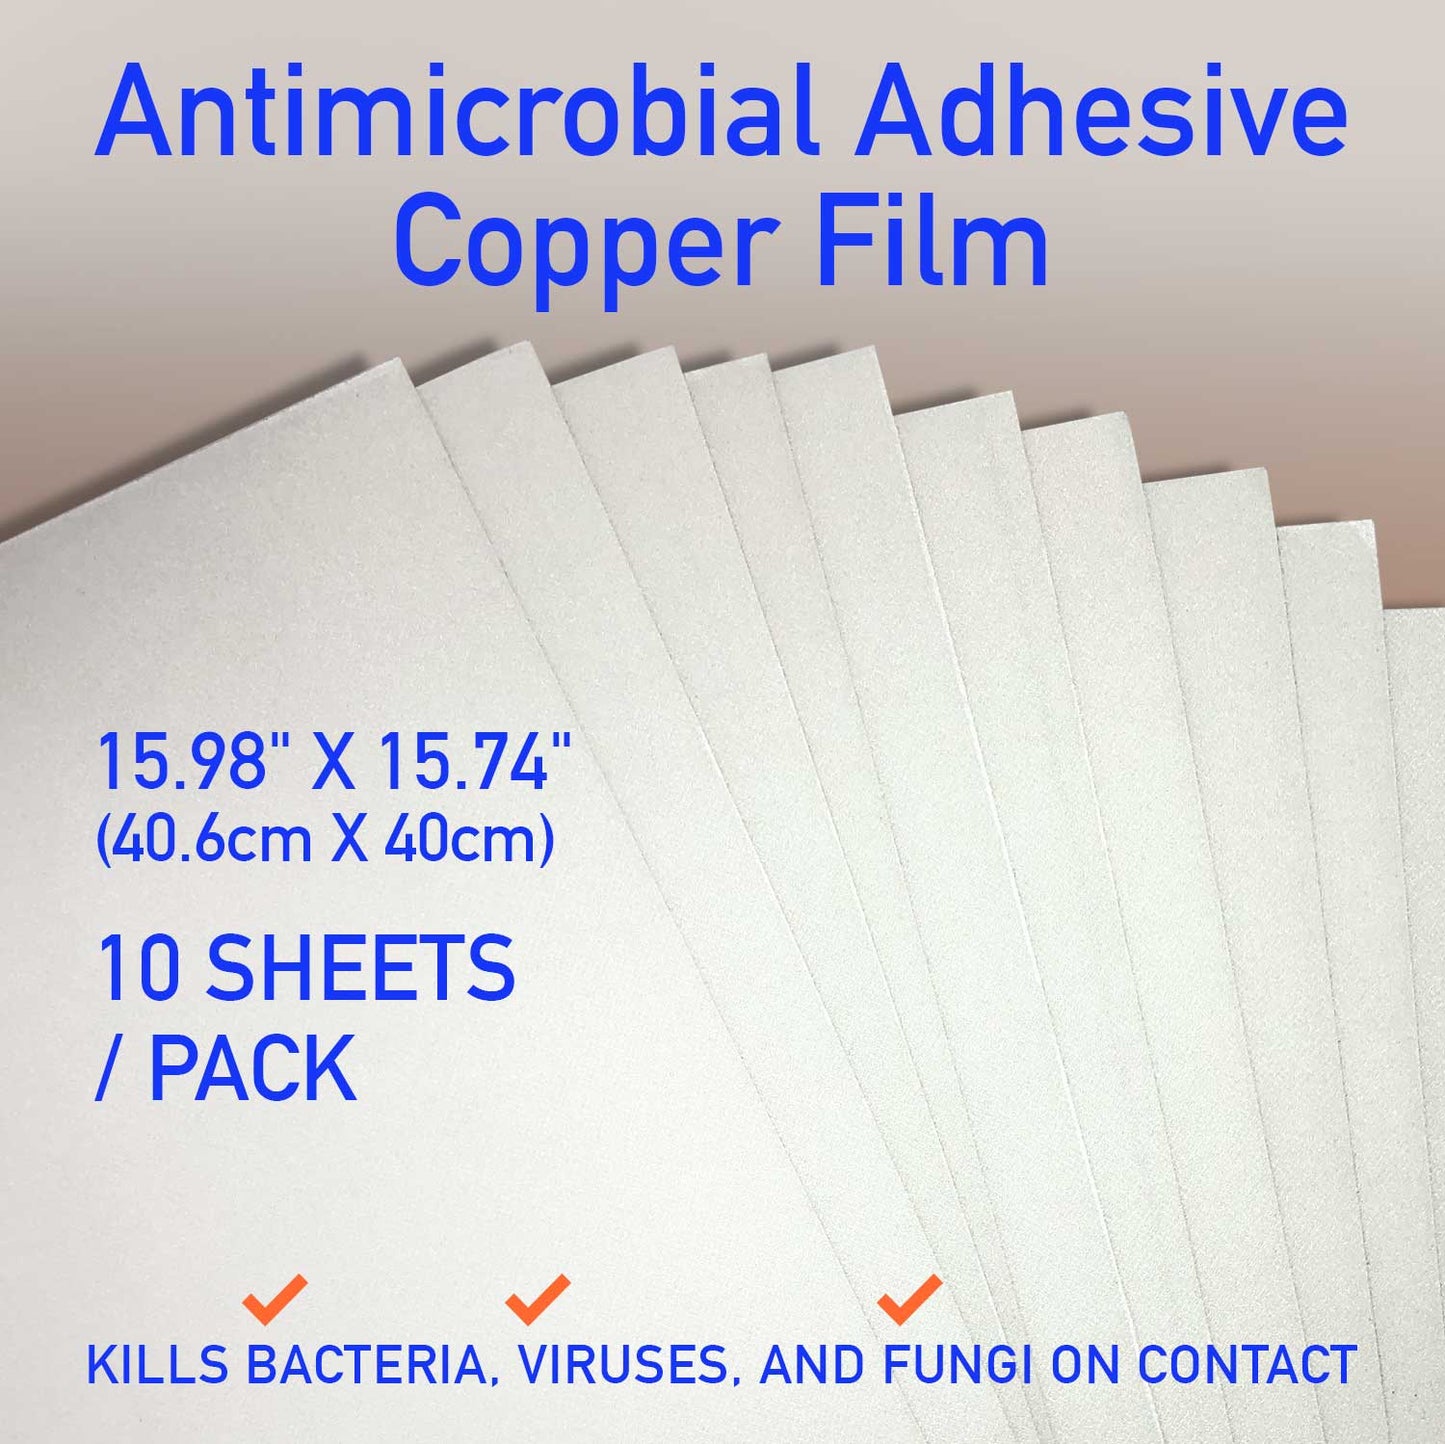 Antimicrobial Adhesive copper Film